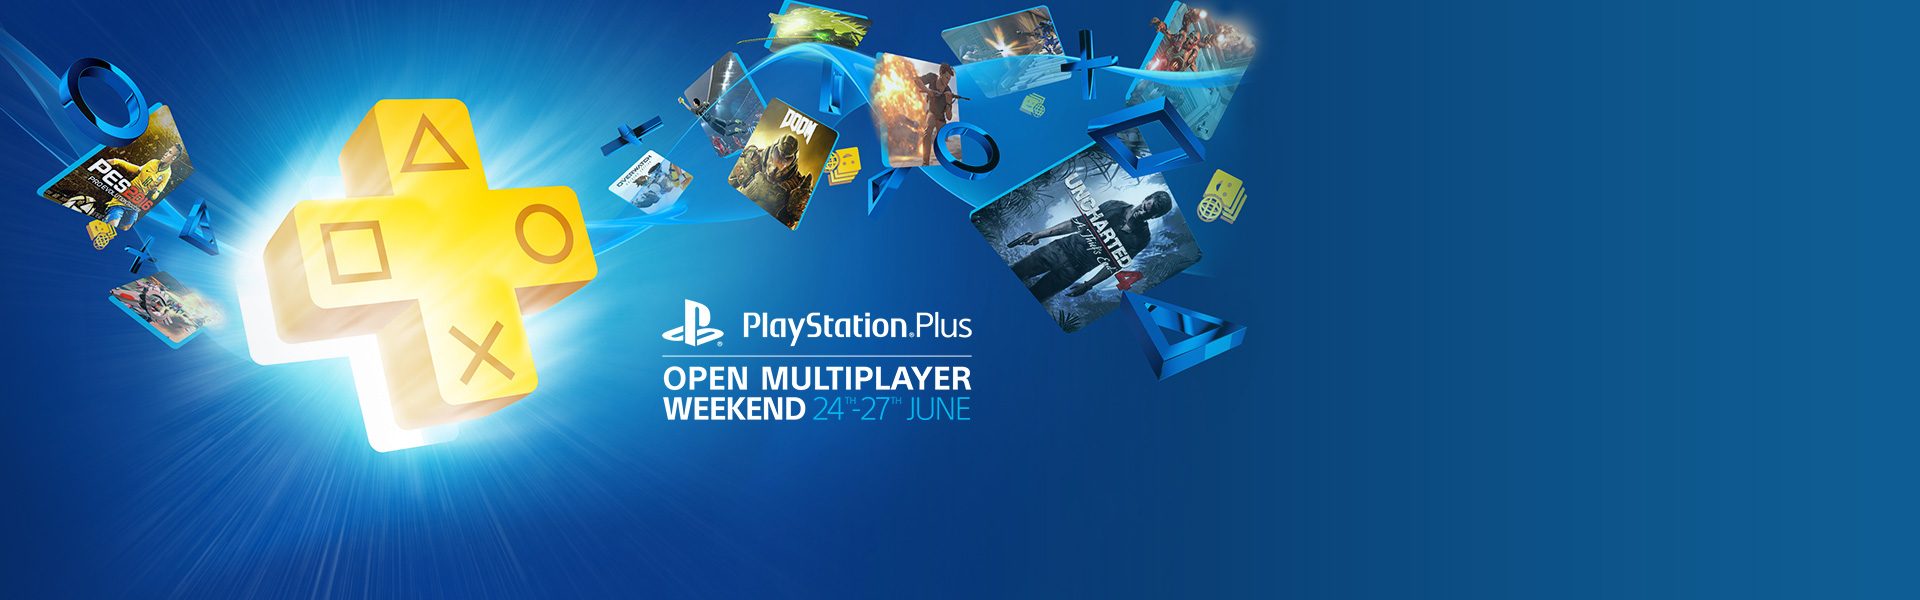 ps plus open multiplayer weekend